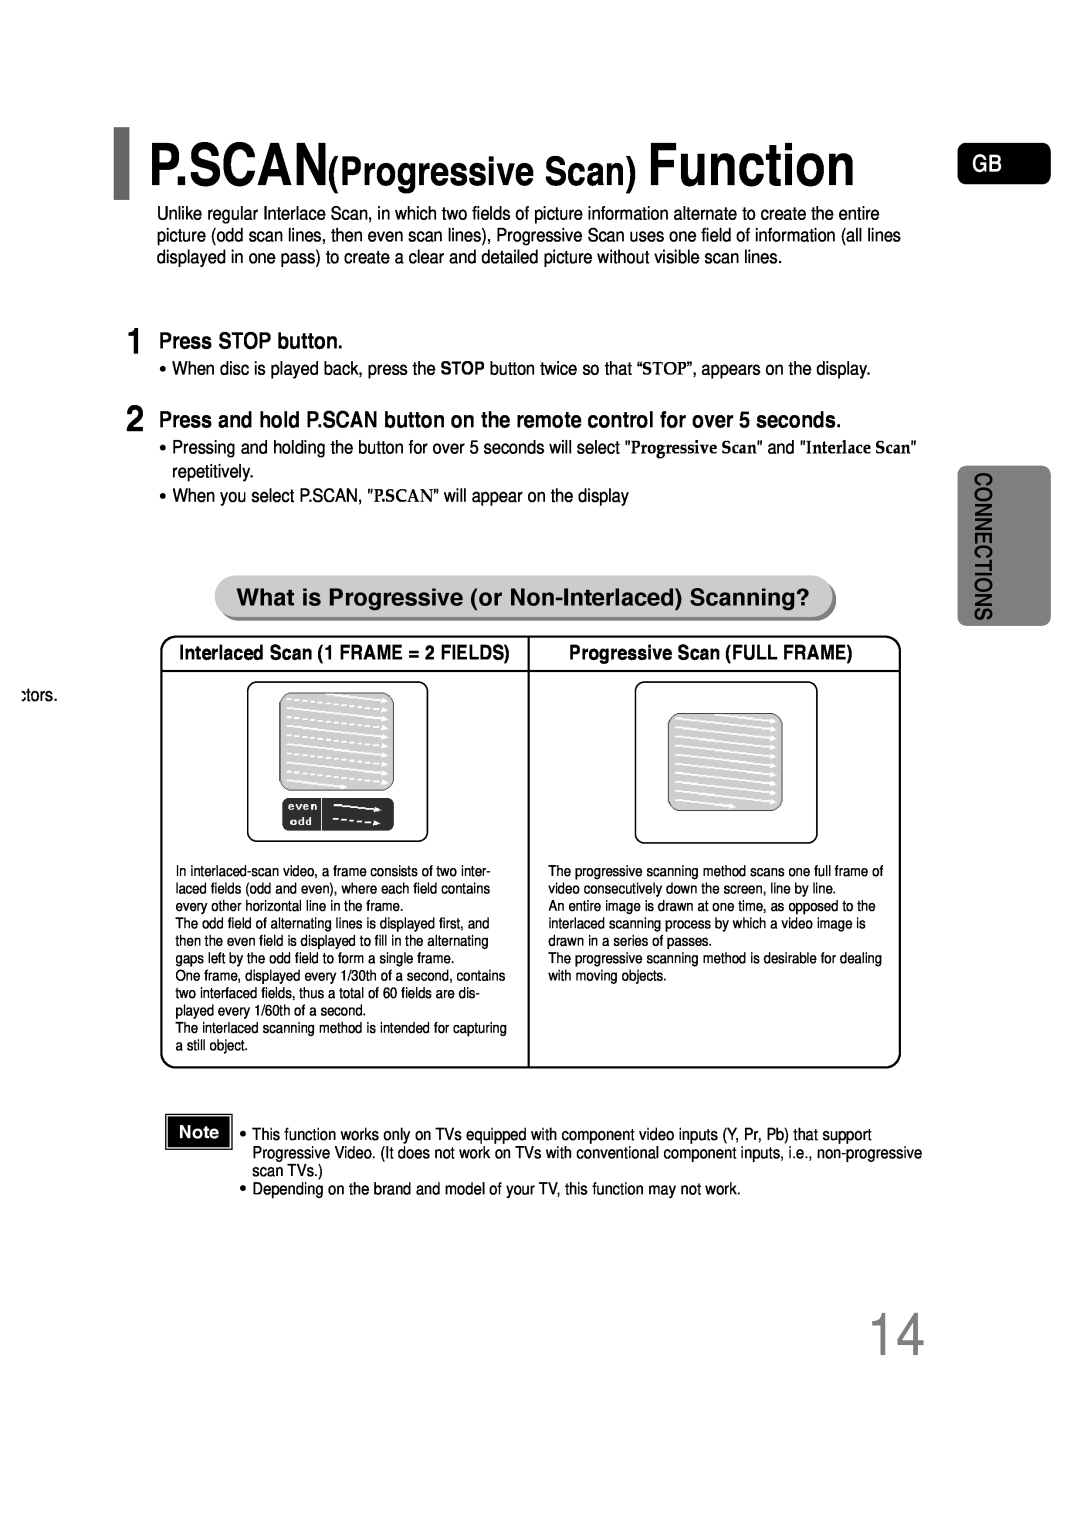 Samsung HT-P30 instruction manual What is Progressive or Non-InterlacedScanning?, P.SCANProgressive Scan Function 